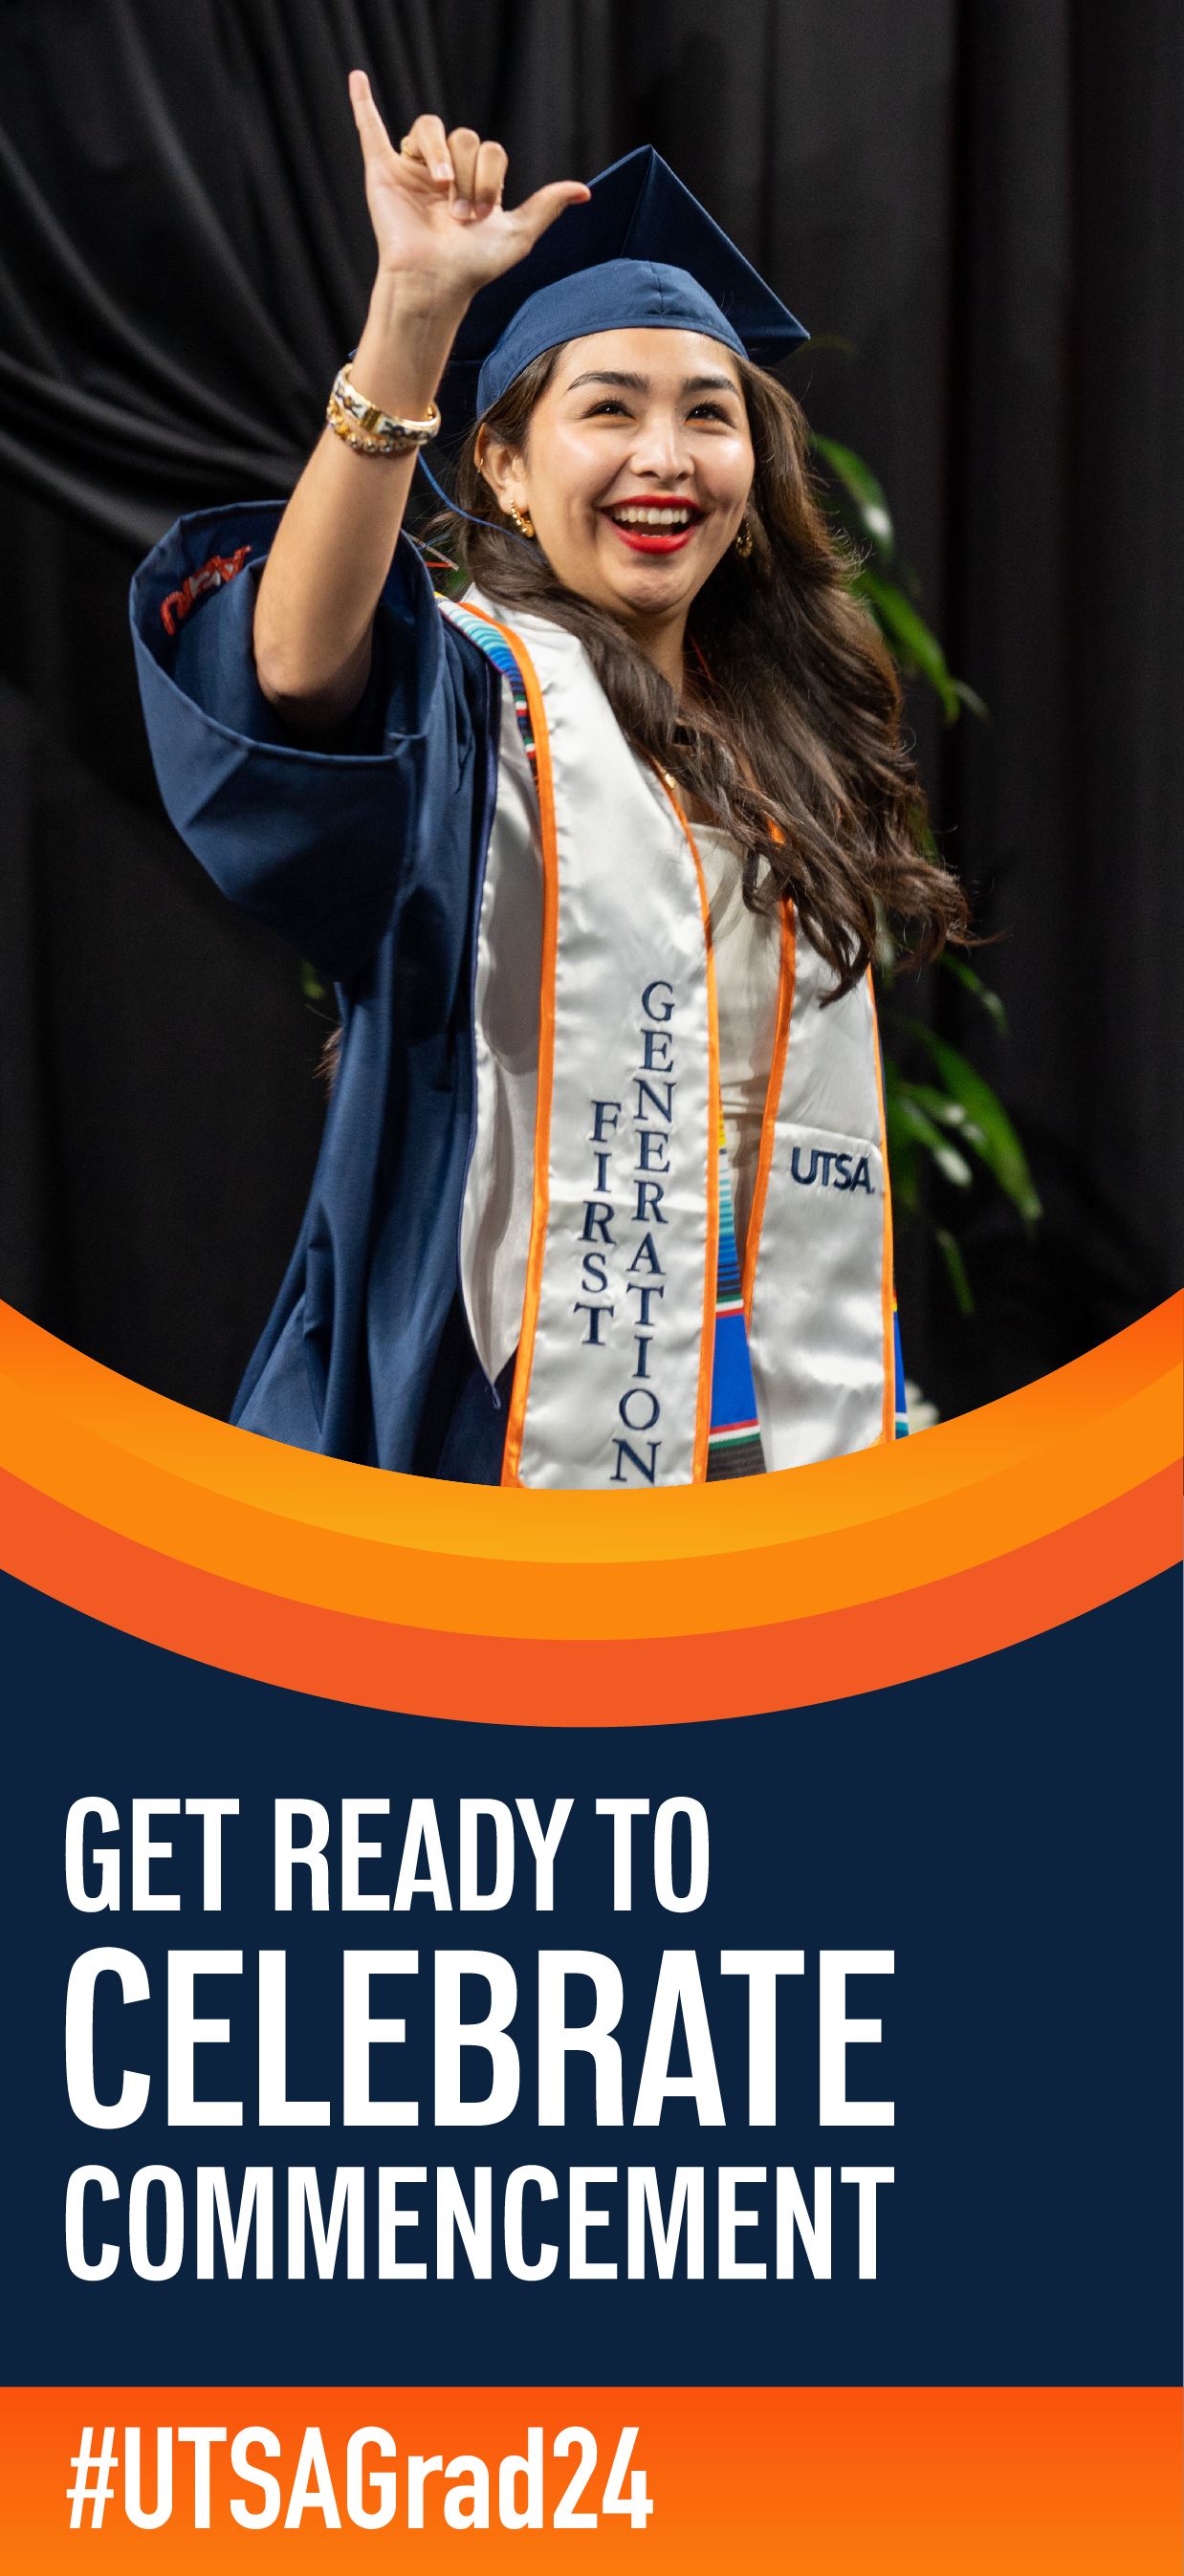 Get Ready To Celebrate Commencement. Learn more at utsa.edu/commencement/ #UTSAGrad24